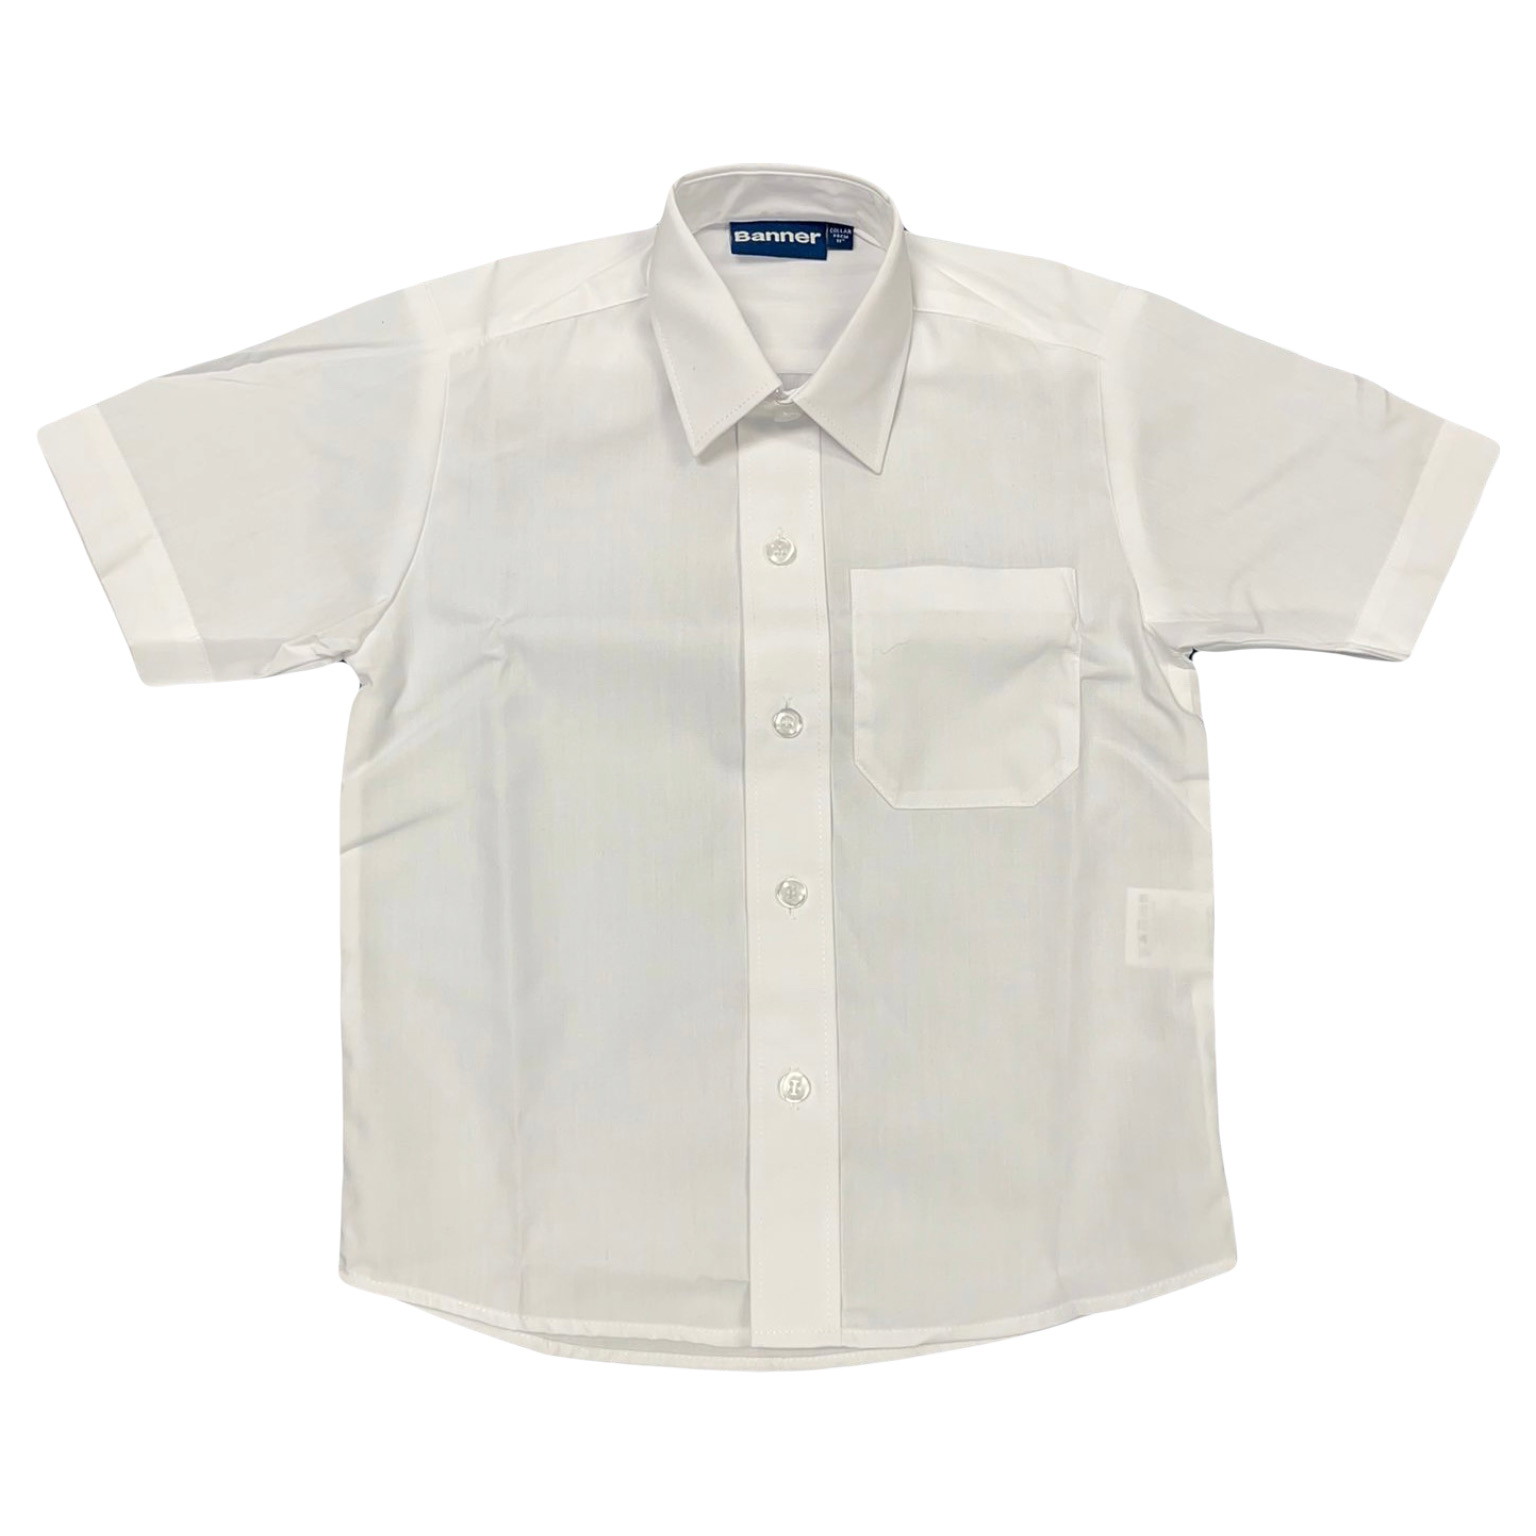 Boys Short Sleeve Shirt – 2 pack